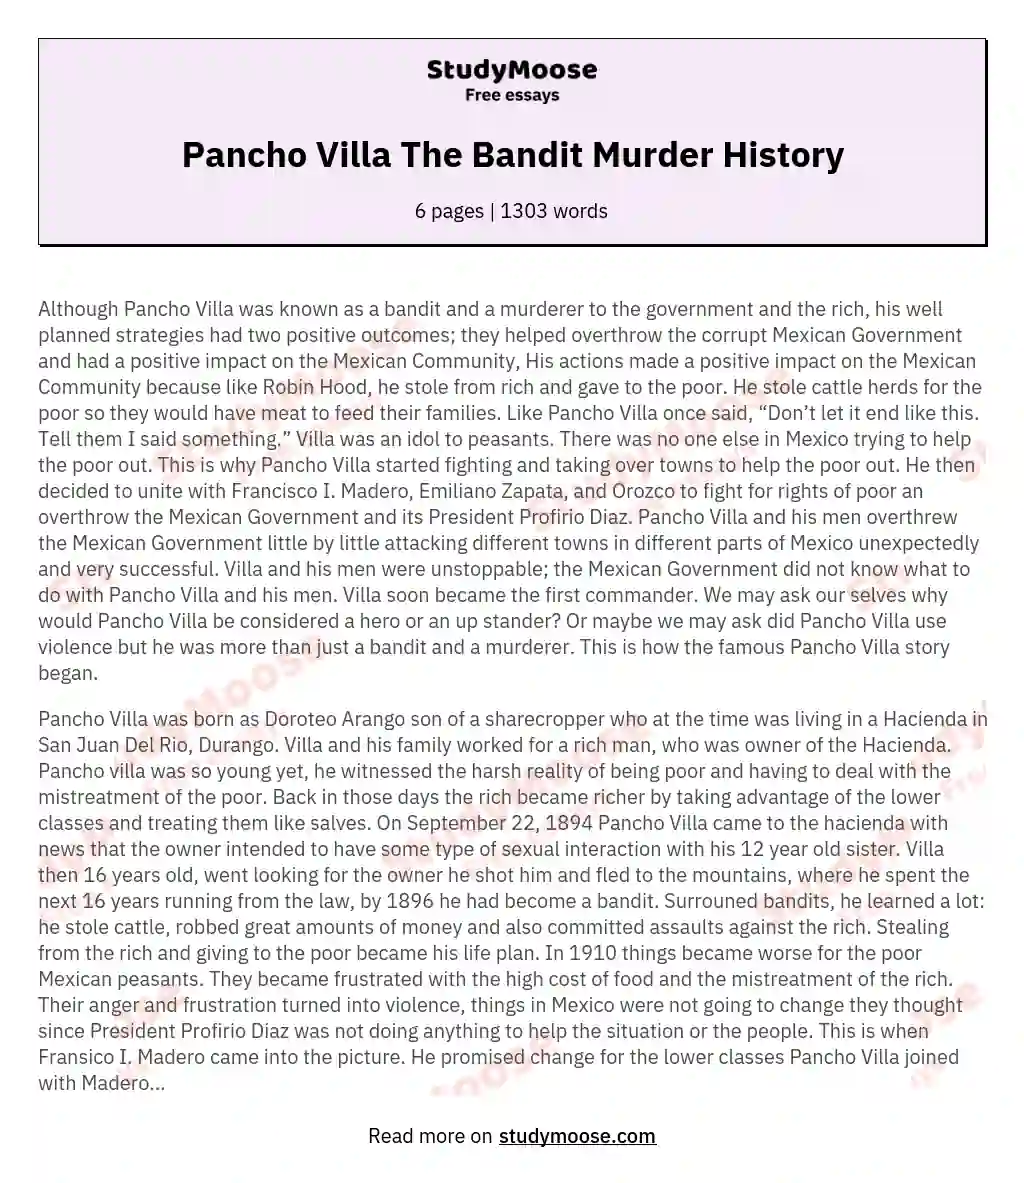 Pancho Villa The Bandit Murder History essay